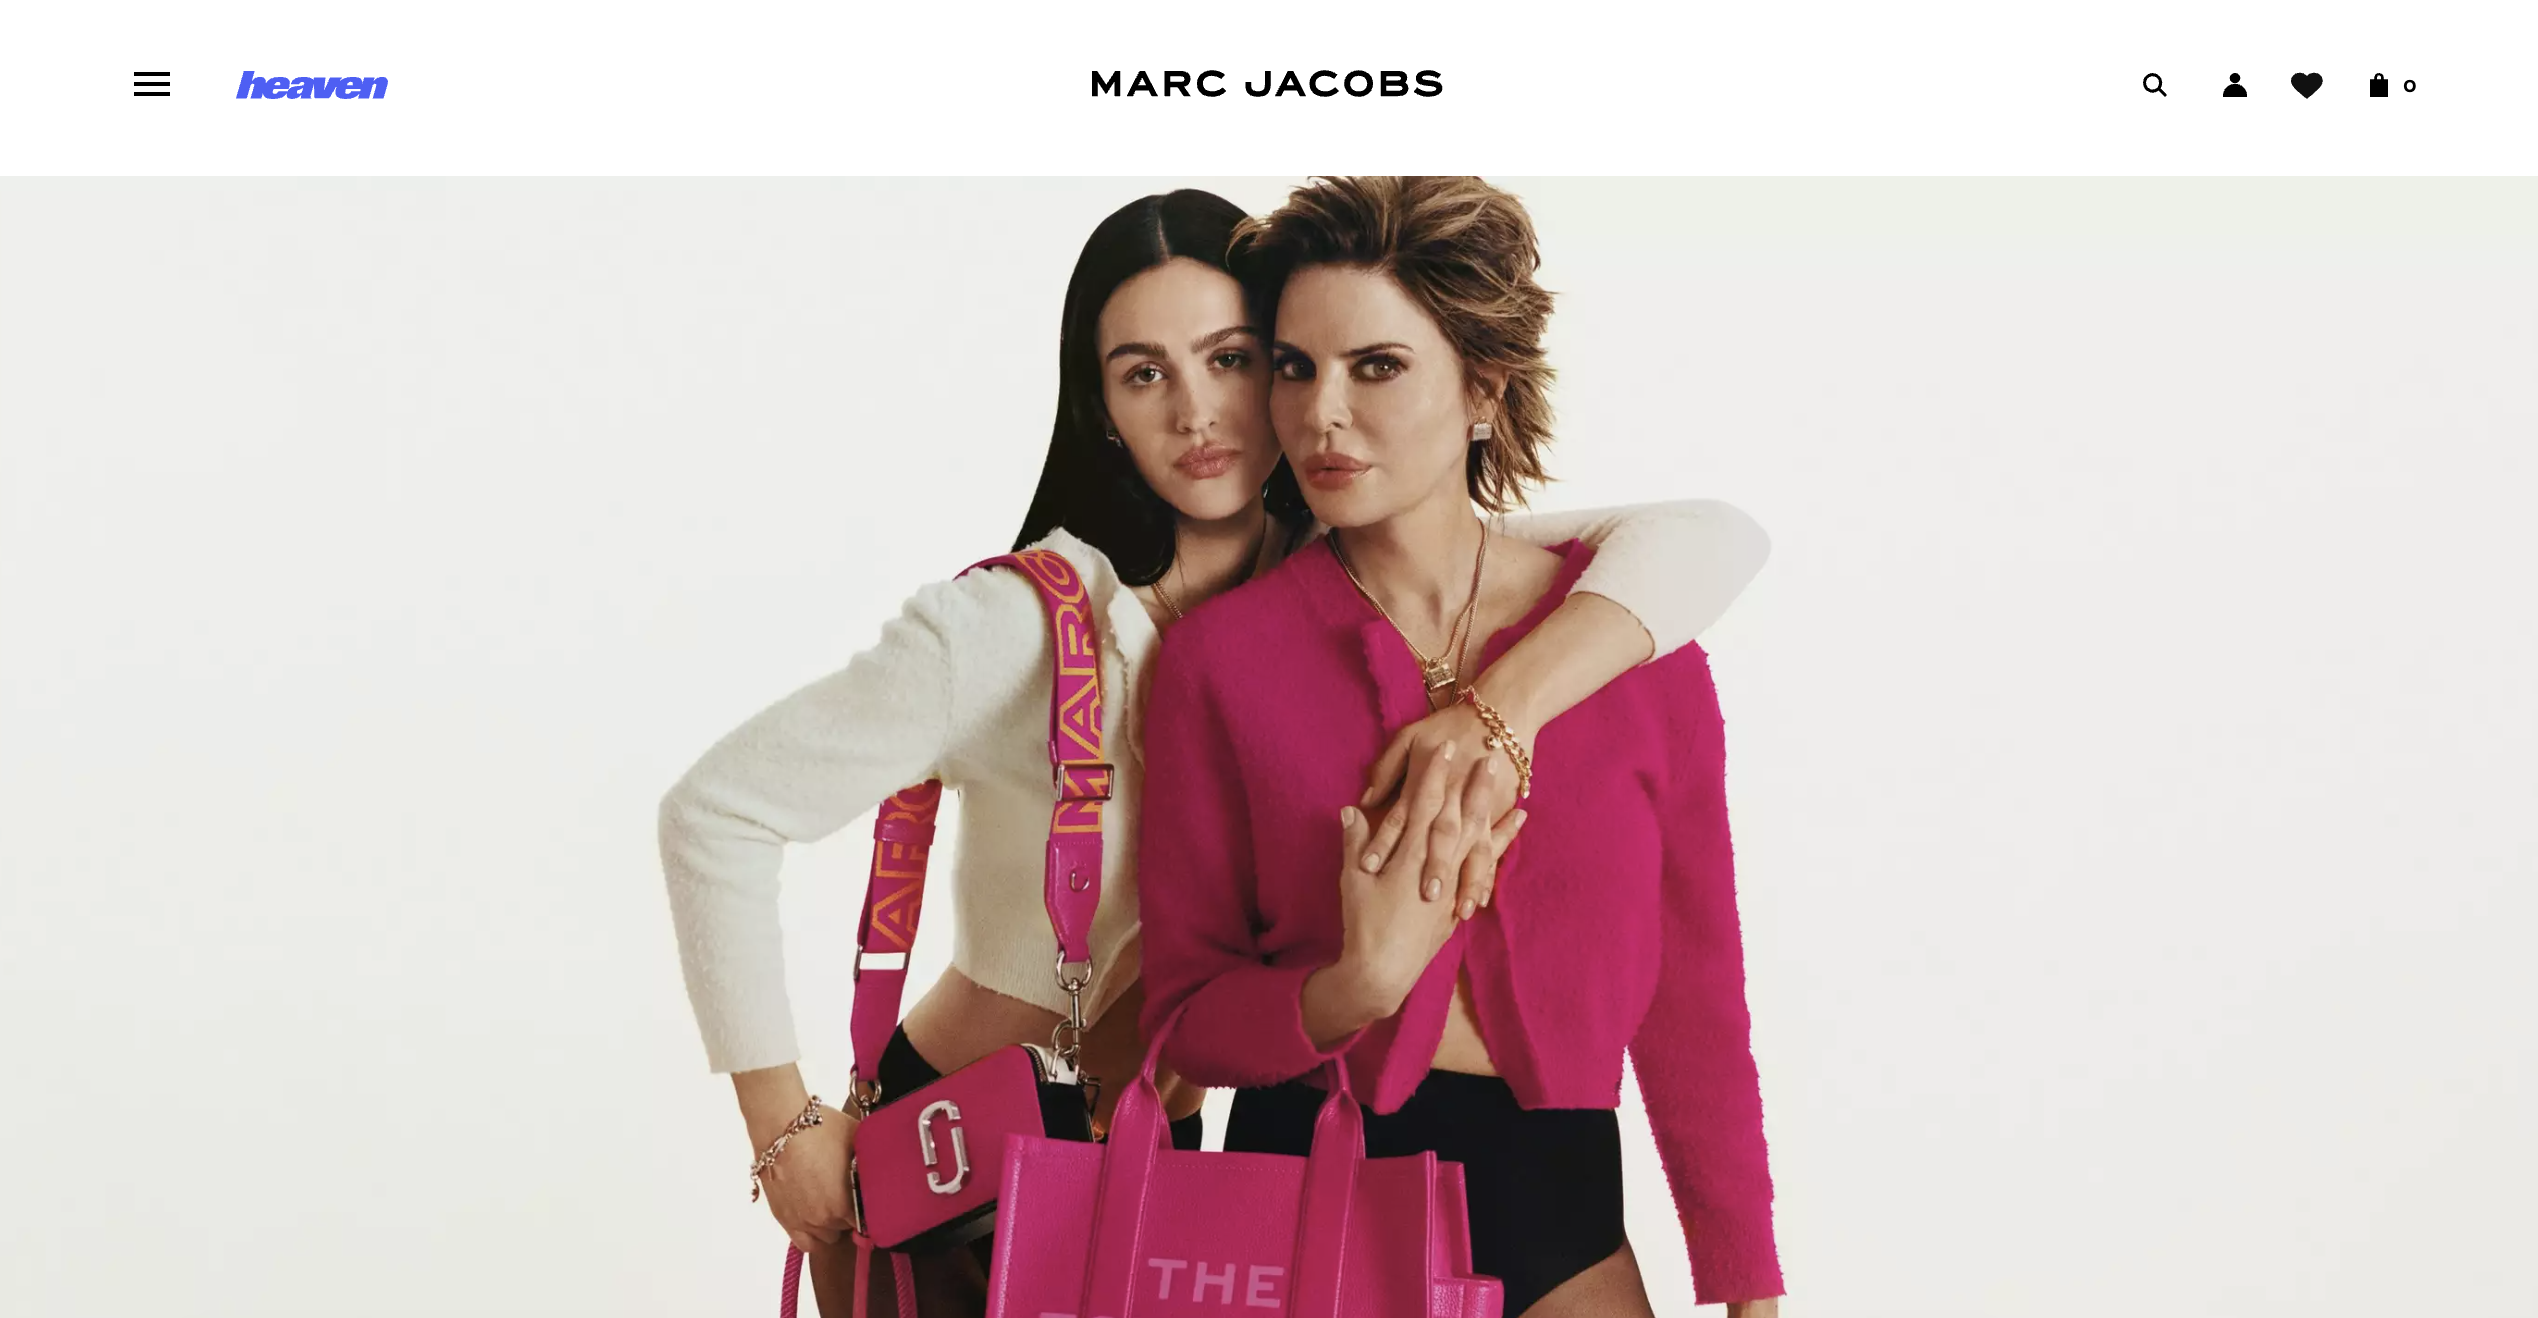 LVMH集团“强烈否认”出售旗下美国时装品牌 Marc Jacobs 的传闻